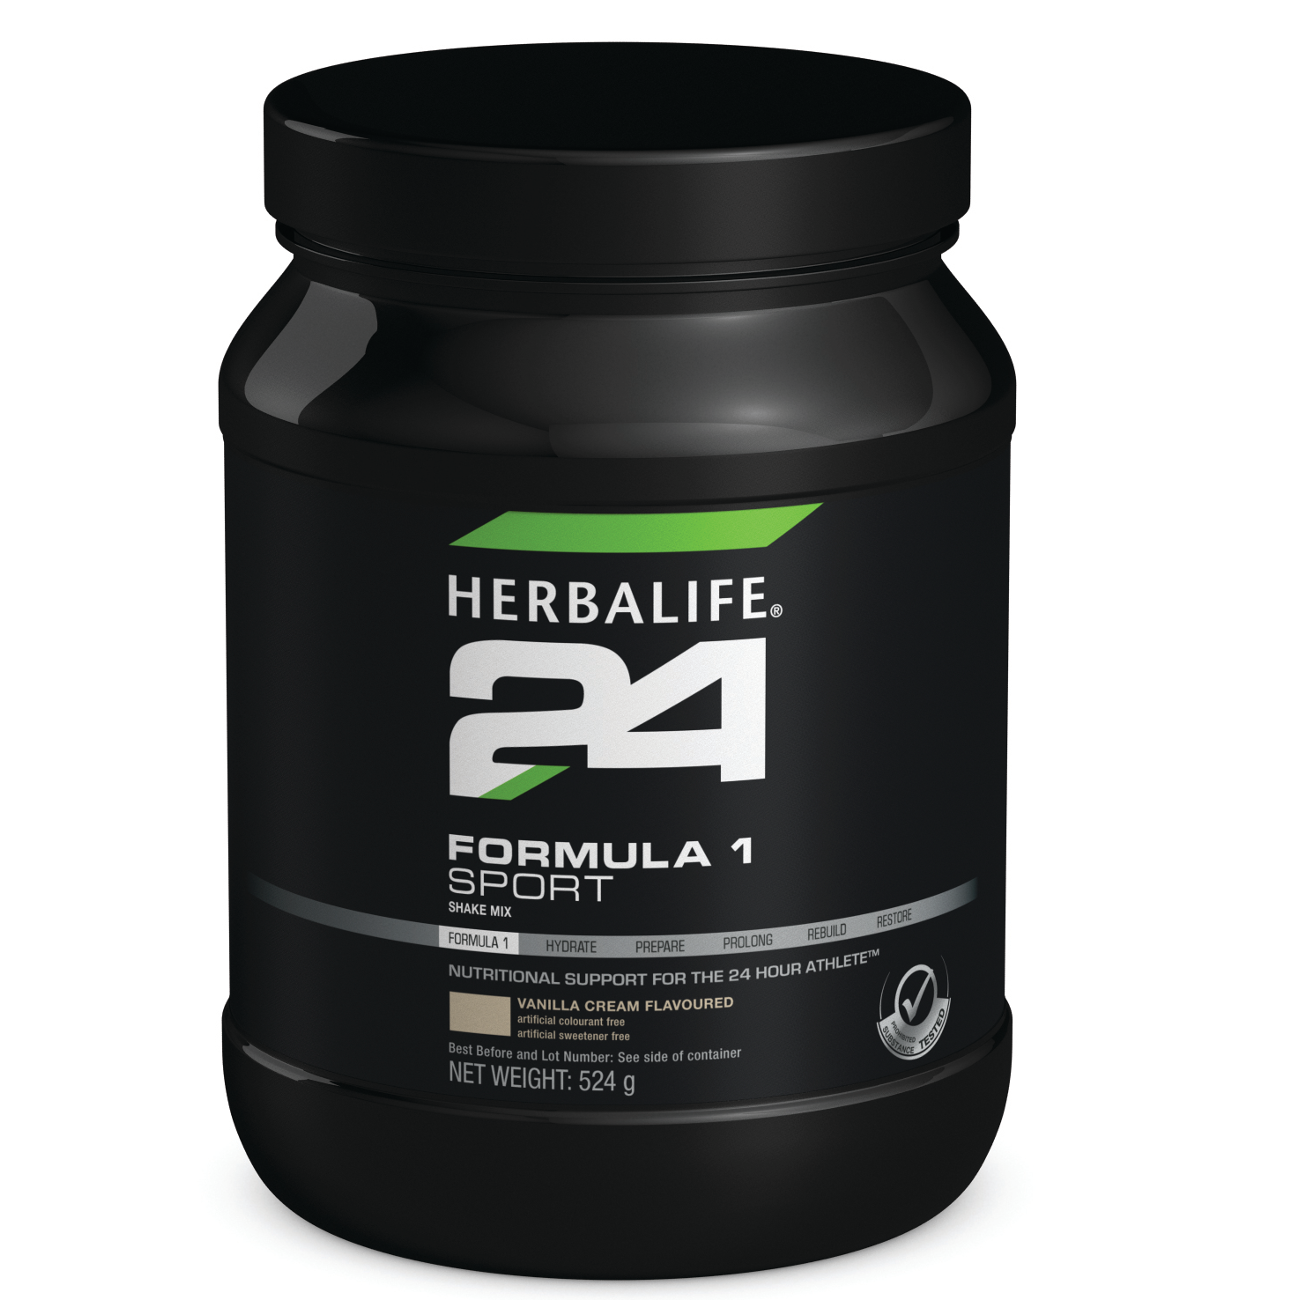 Herbalife24Â® Formula 1 Sports Shake Mix Vanilla Cream Flavoured product shot